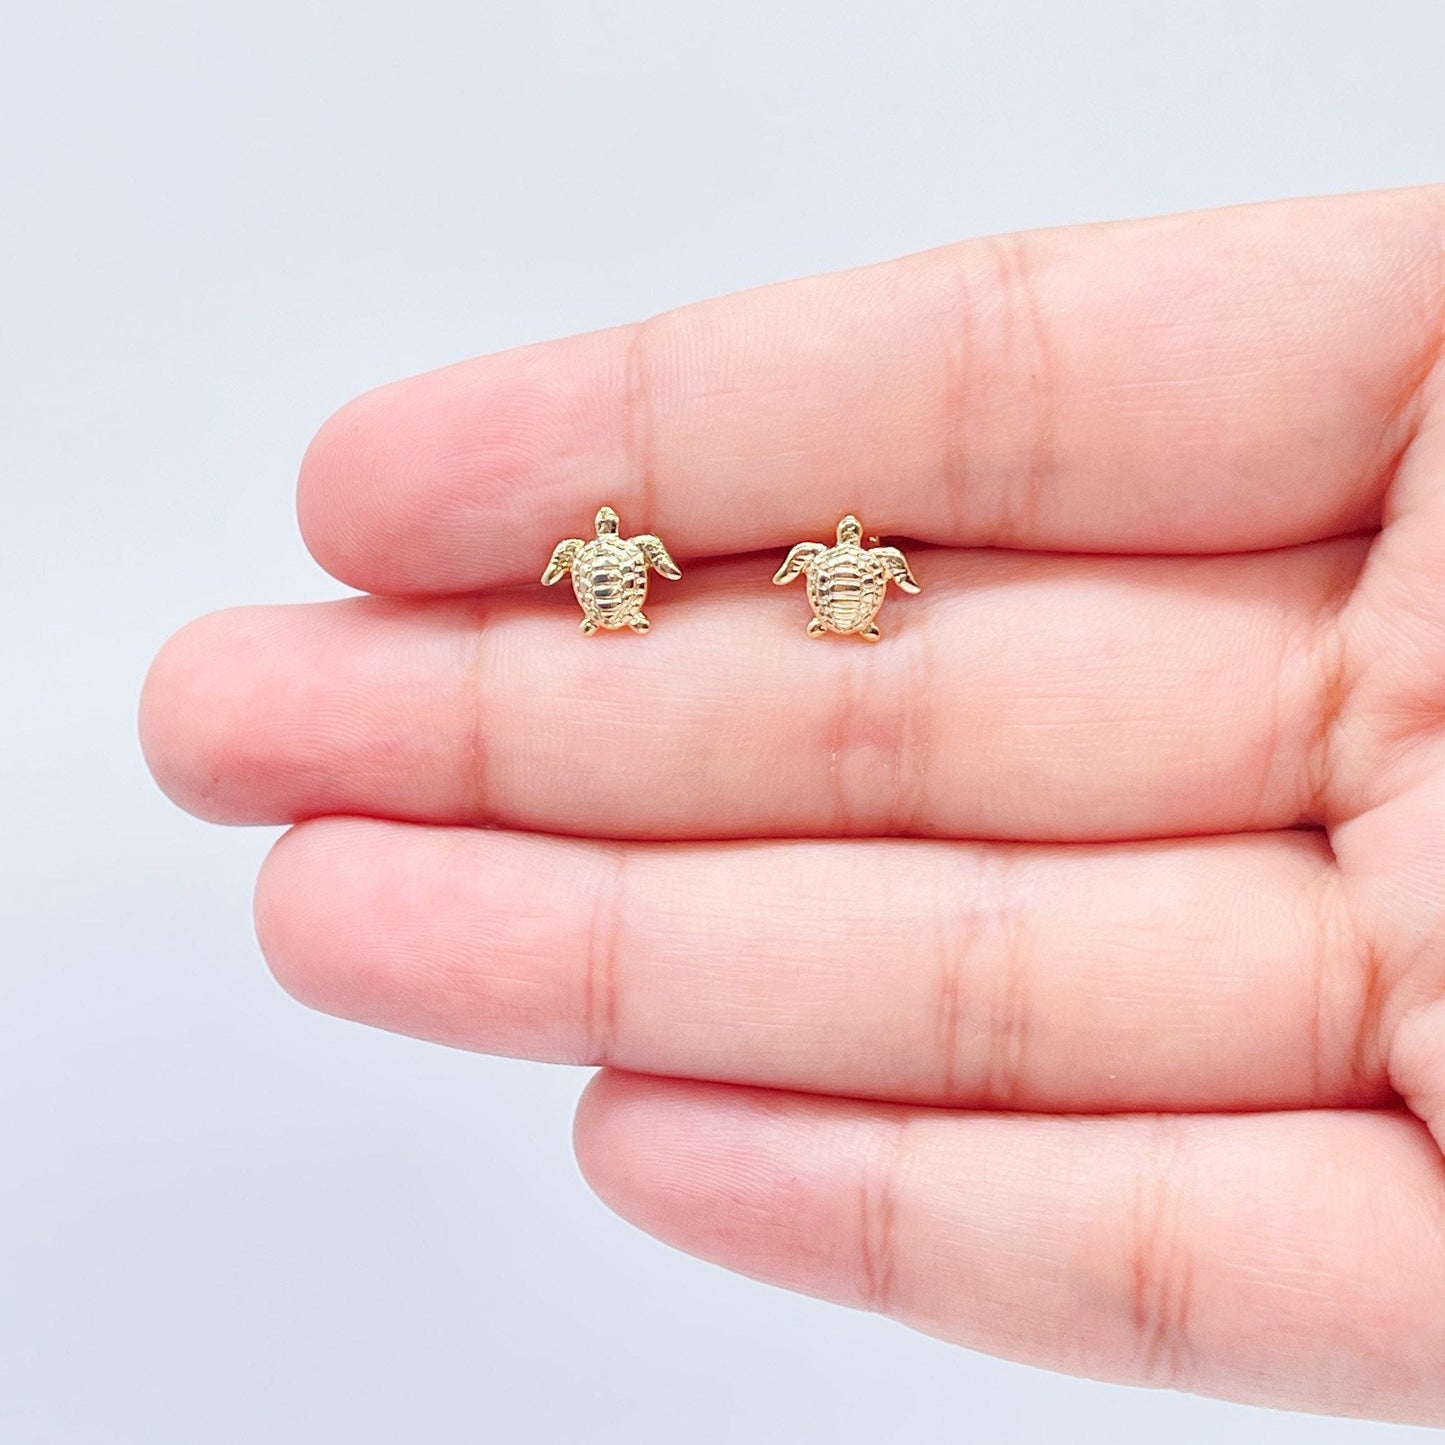 18k Gold Layered Tiny Plain Turtle Dainty Stud Earrings, Sea Animal Ocean